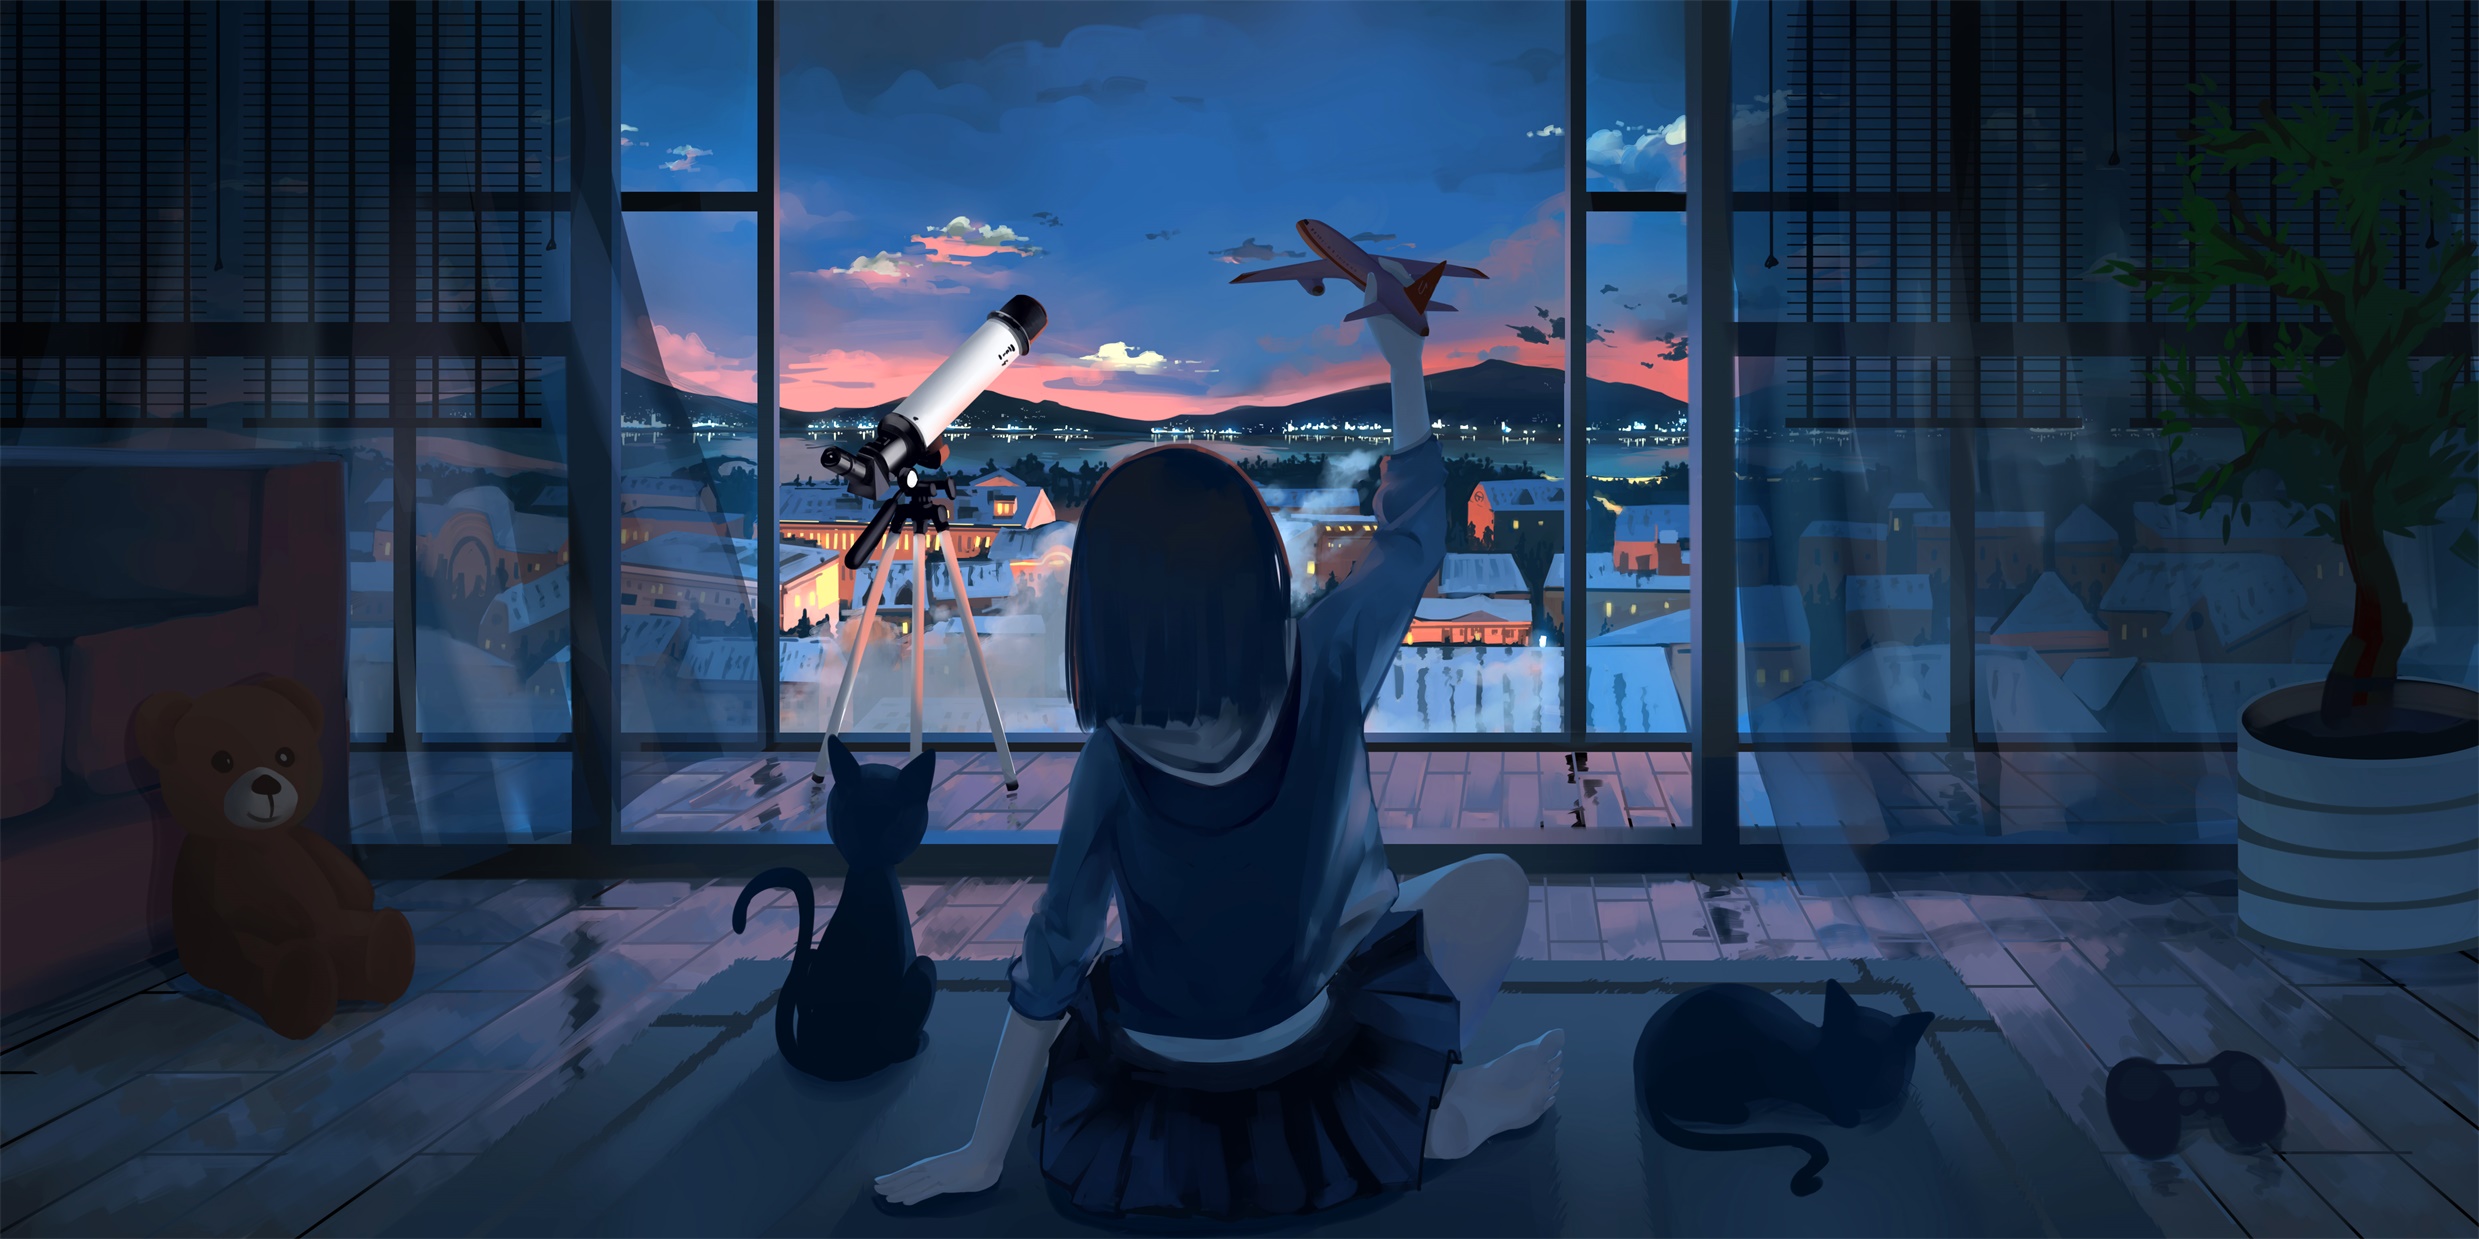 Anime 2479x1239 anime anime girls original characters short hair dark hair cats airplane night sky clouds